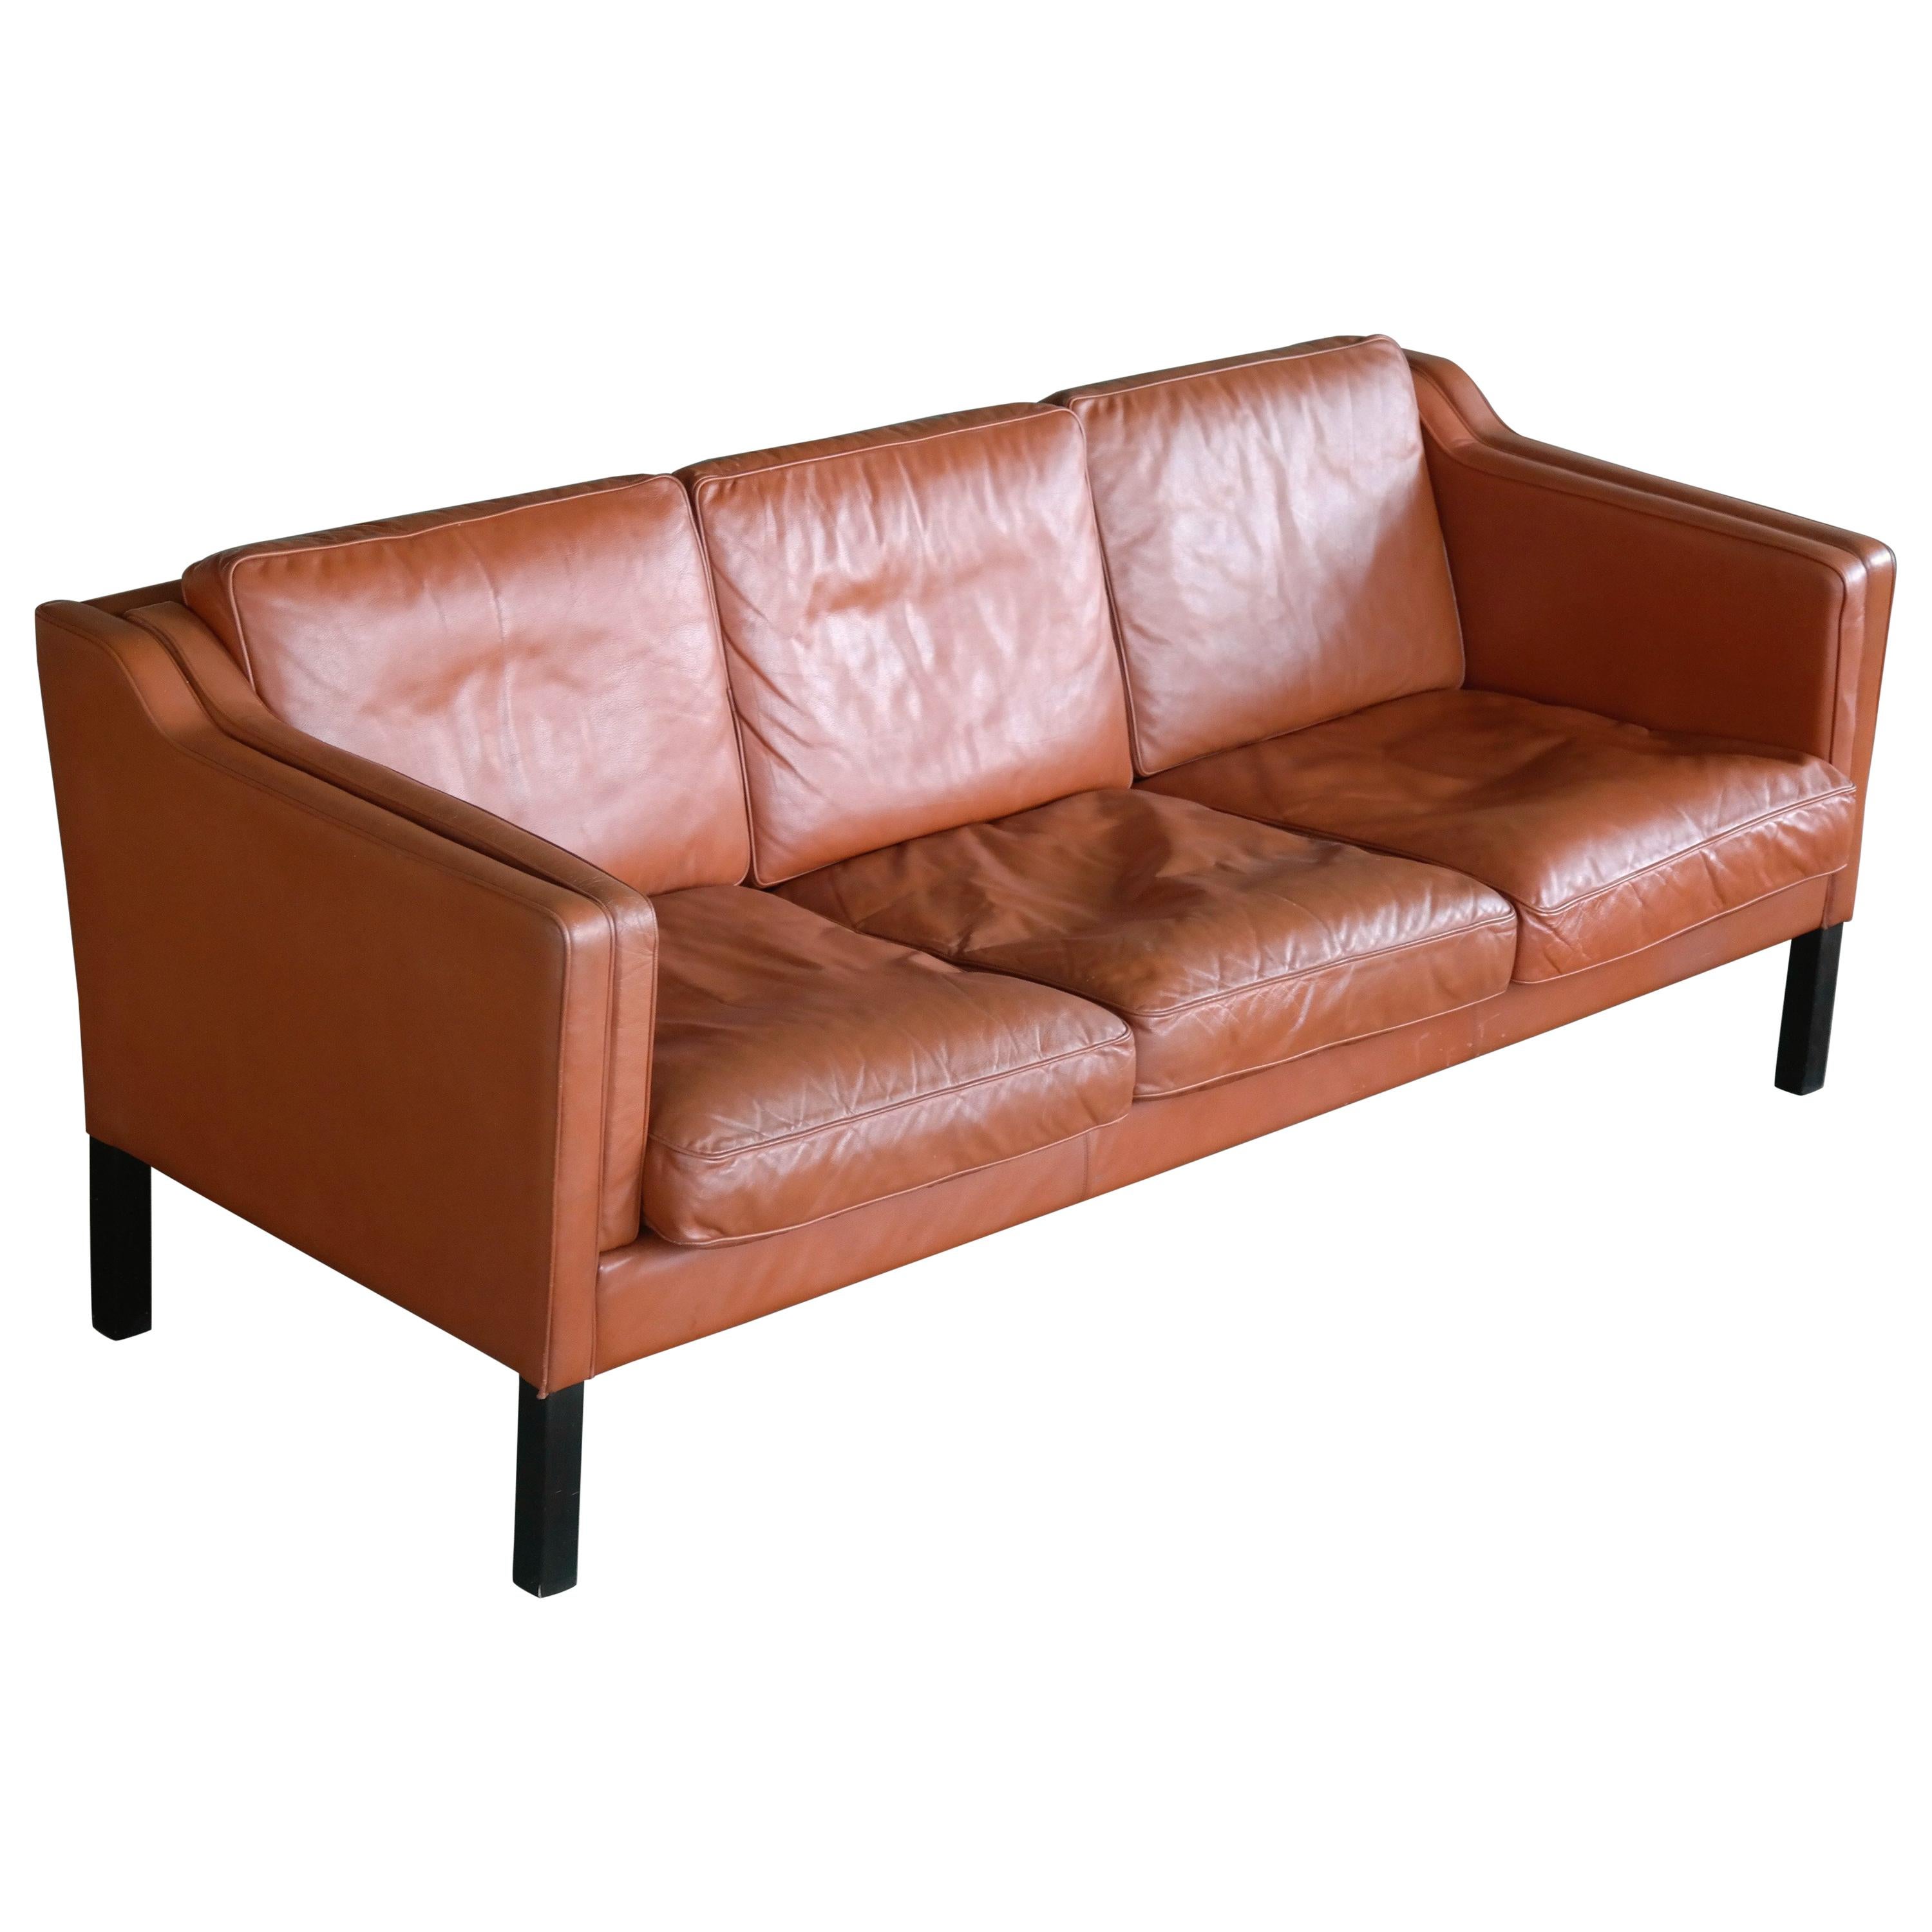 Classic Danish Børge Mogensen Model 2213 Style Sofa in Cognac Colored Leather